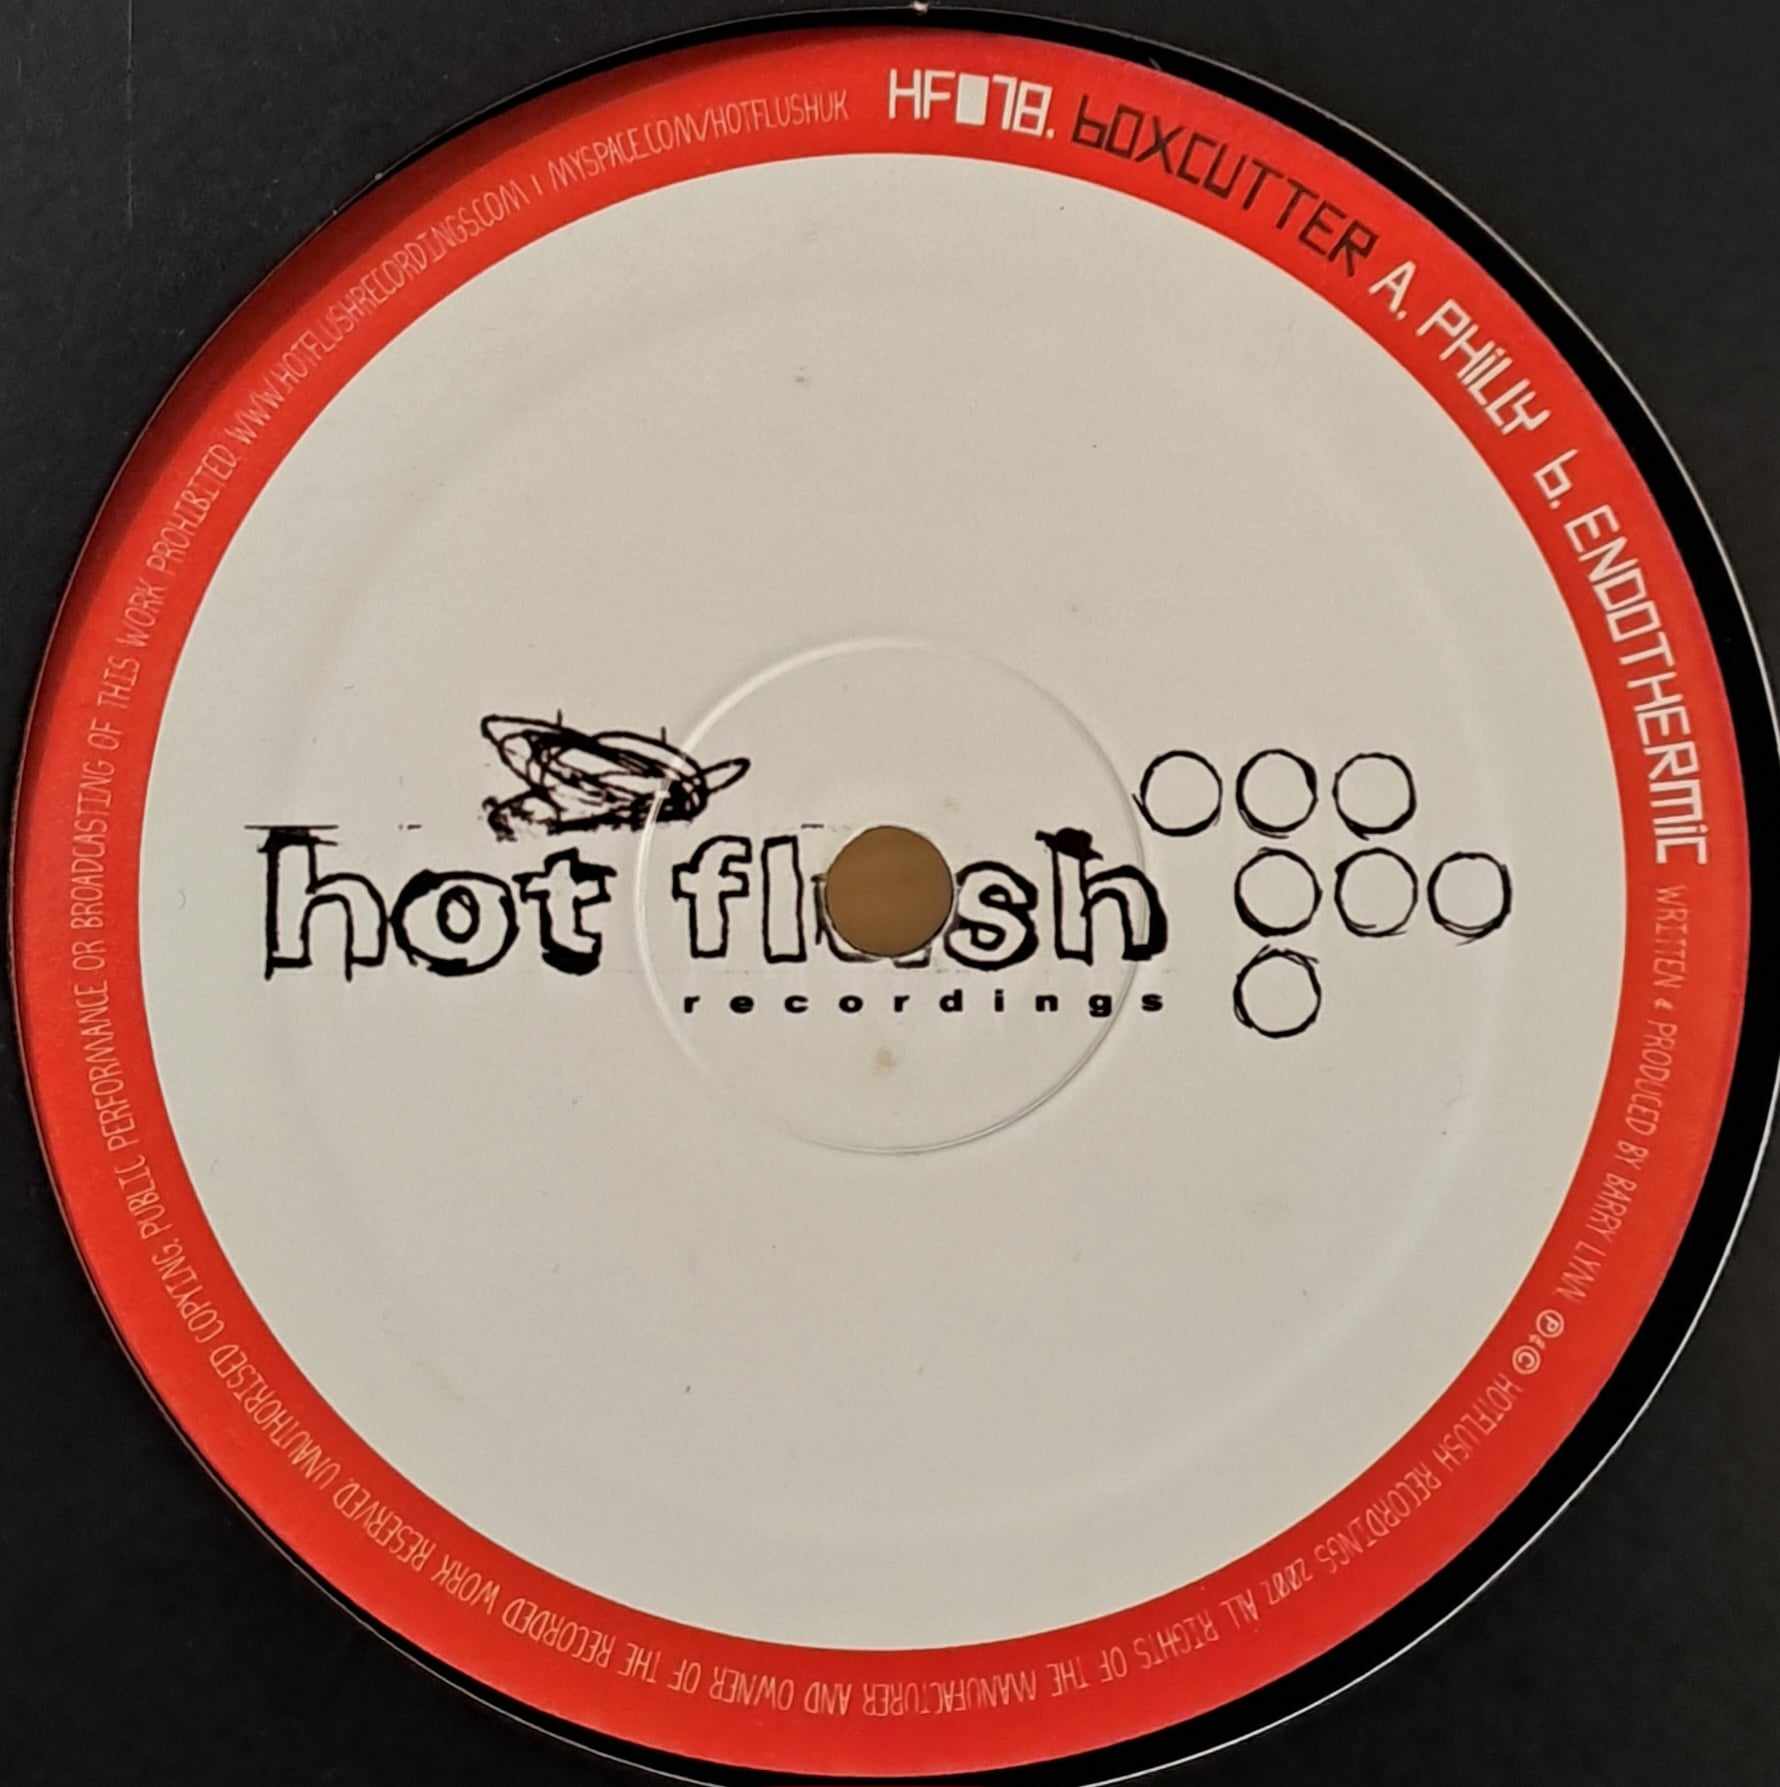 Hotflush Recordings 018 - vinyle dubstep